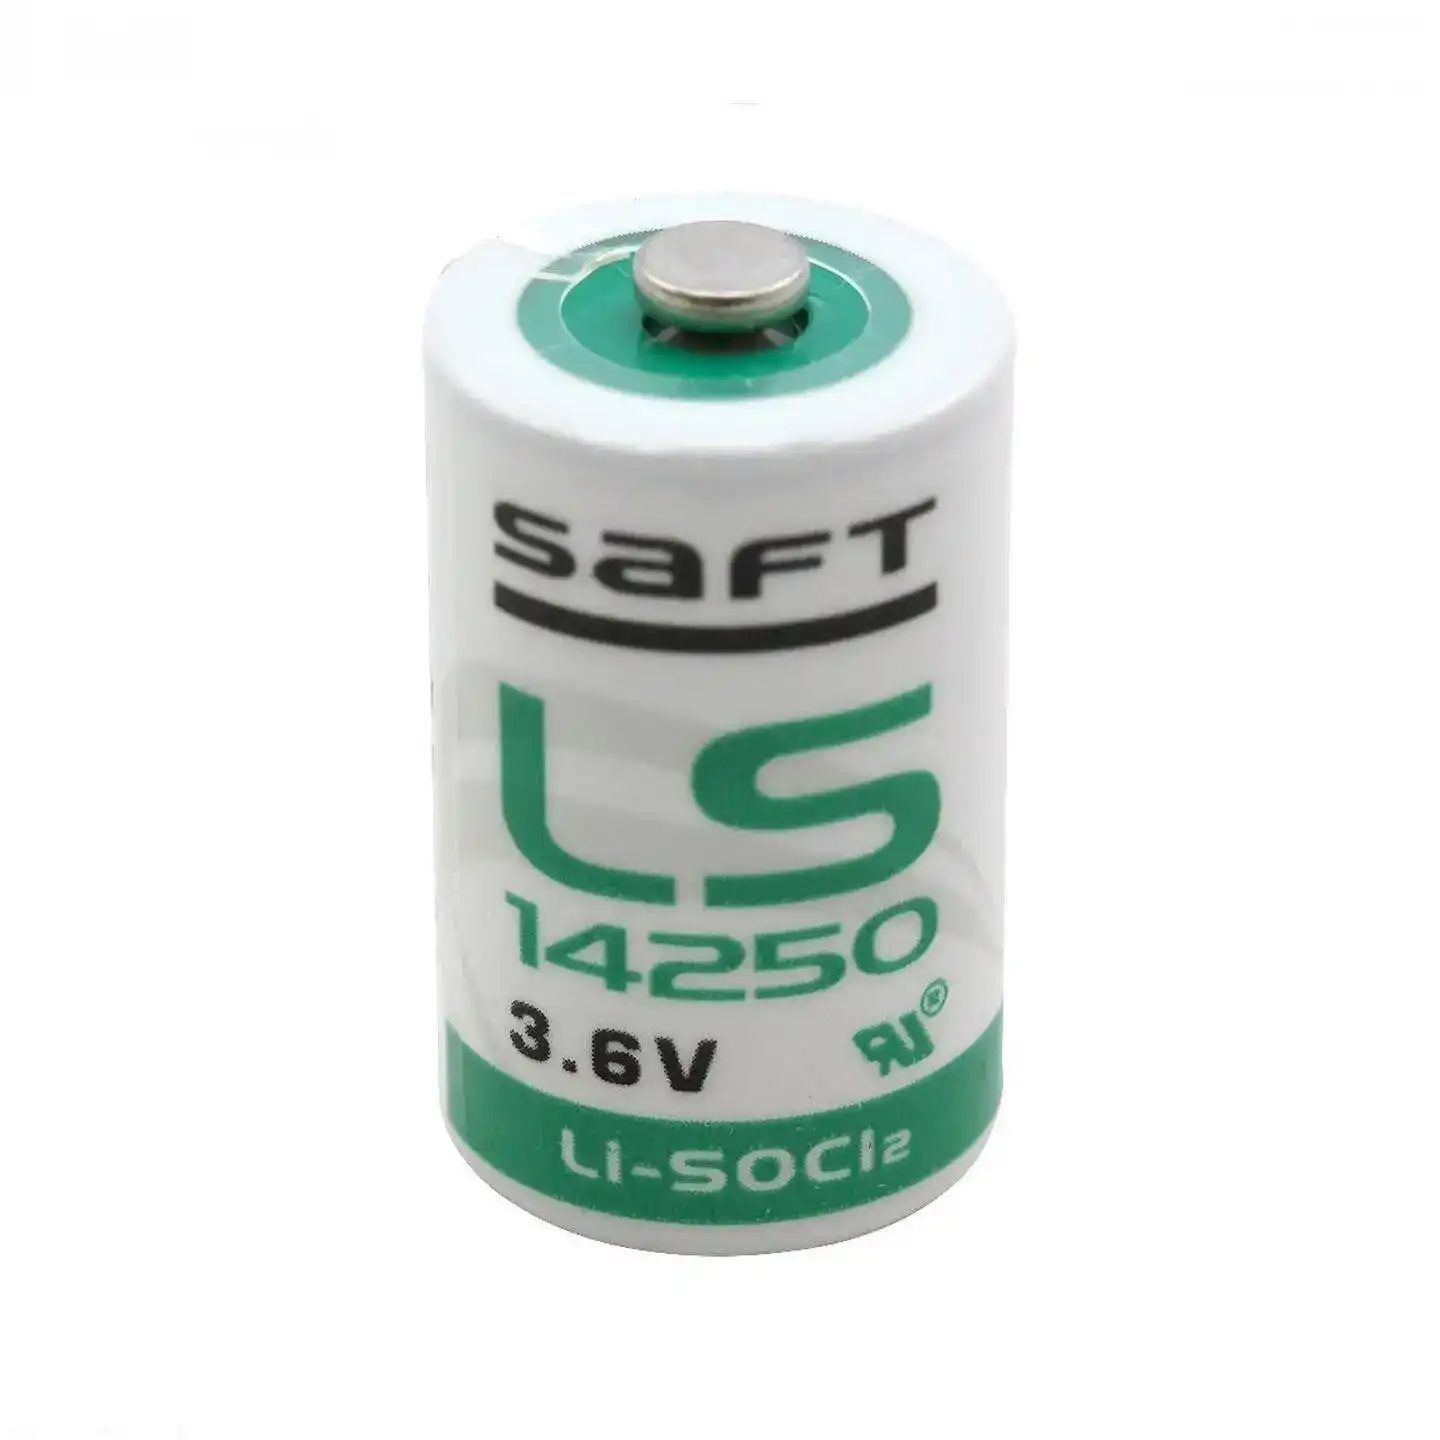 Saft LS14250 ER14250 3.6V Lithium Battery 1/2AA R6 Li-SOCl2 nipple top battery